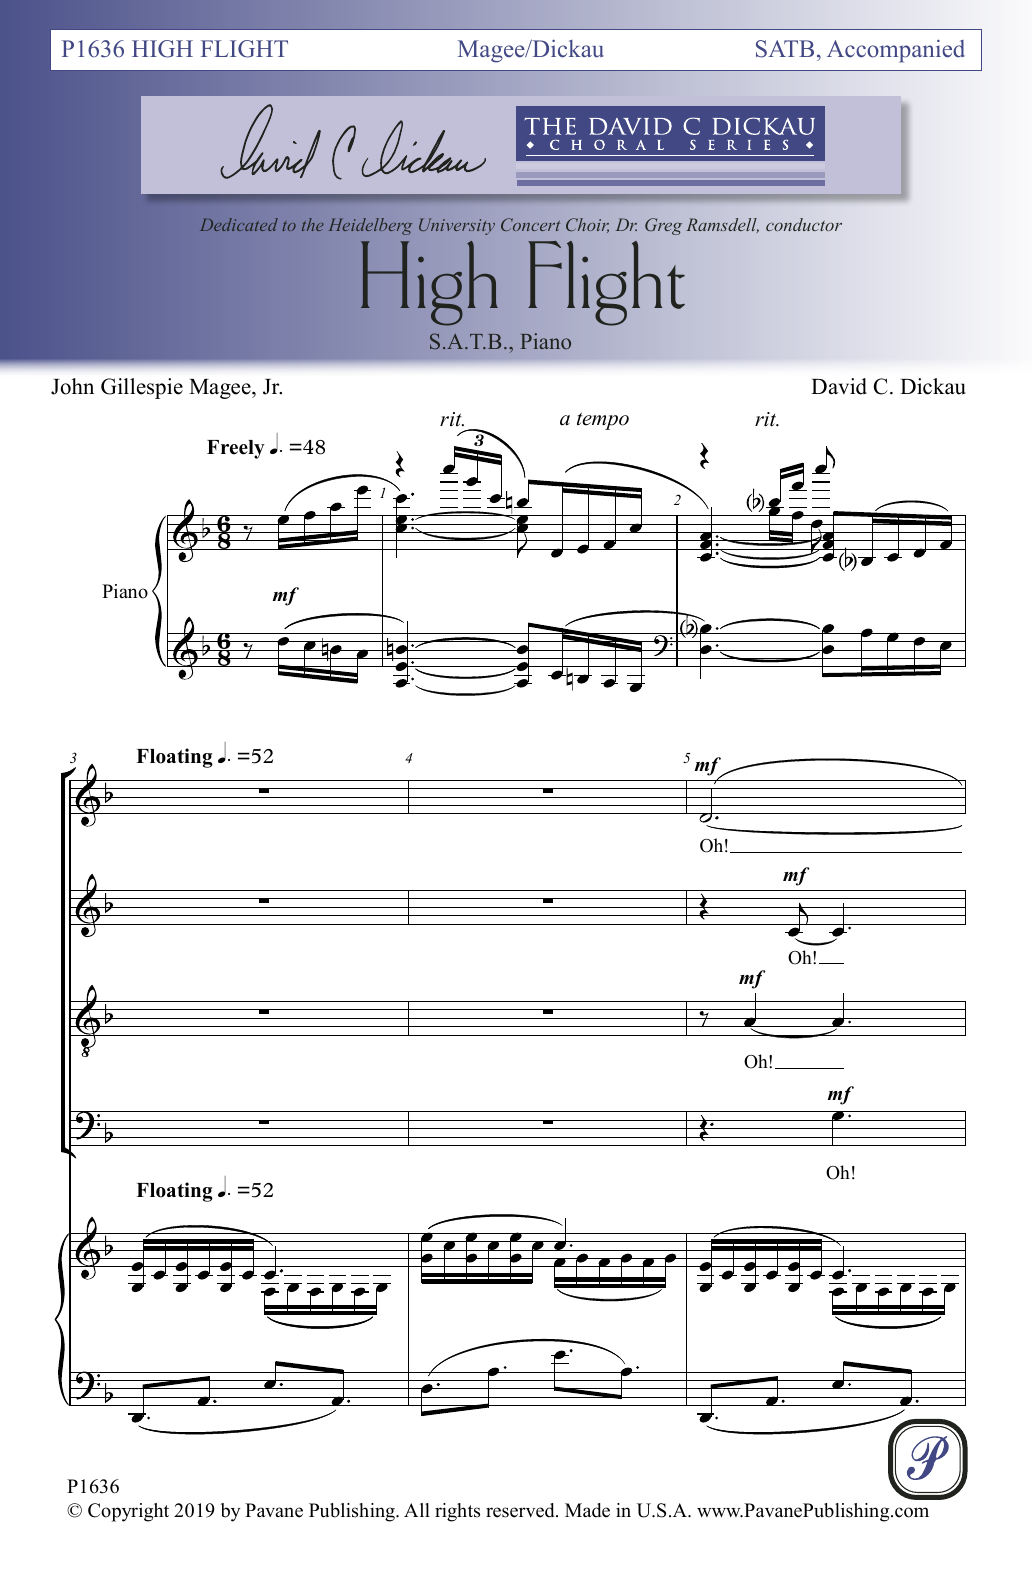 John Gillespie Magee, Jr. and David C. Dickau High Flight sheet music notes and chords arranged for SATB Choir